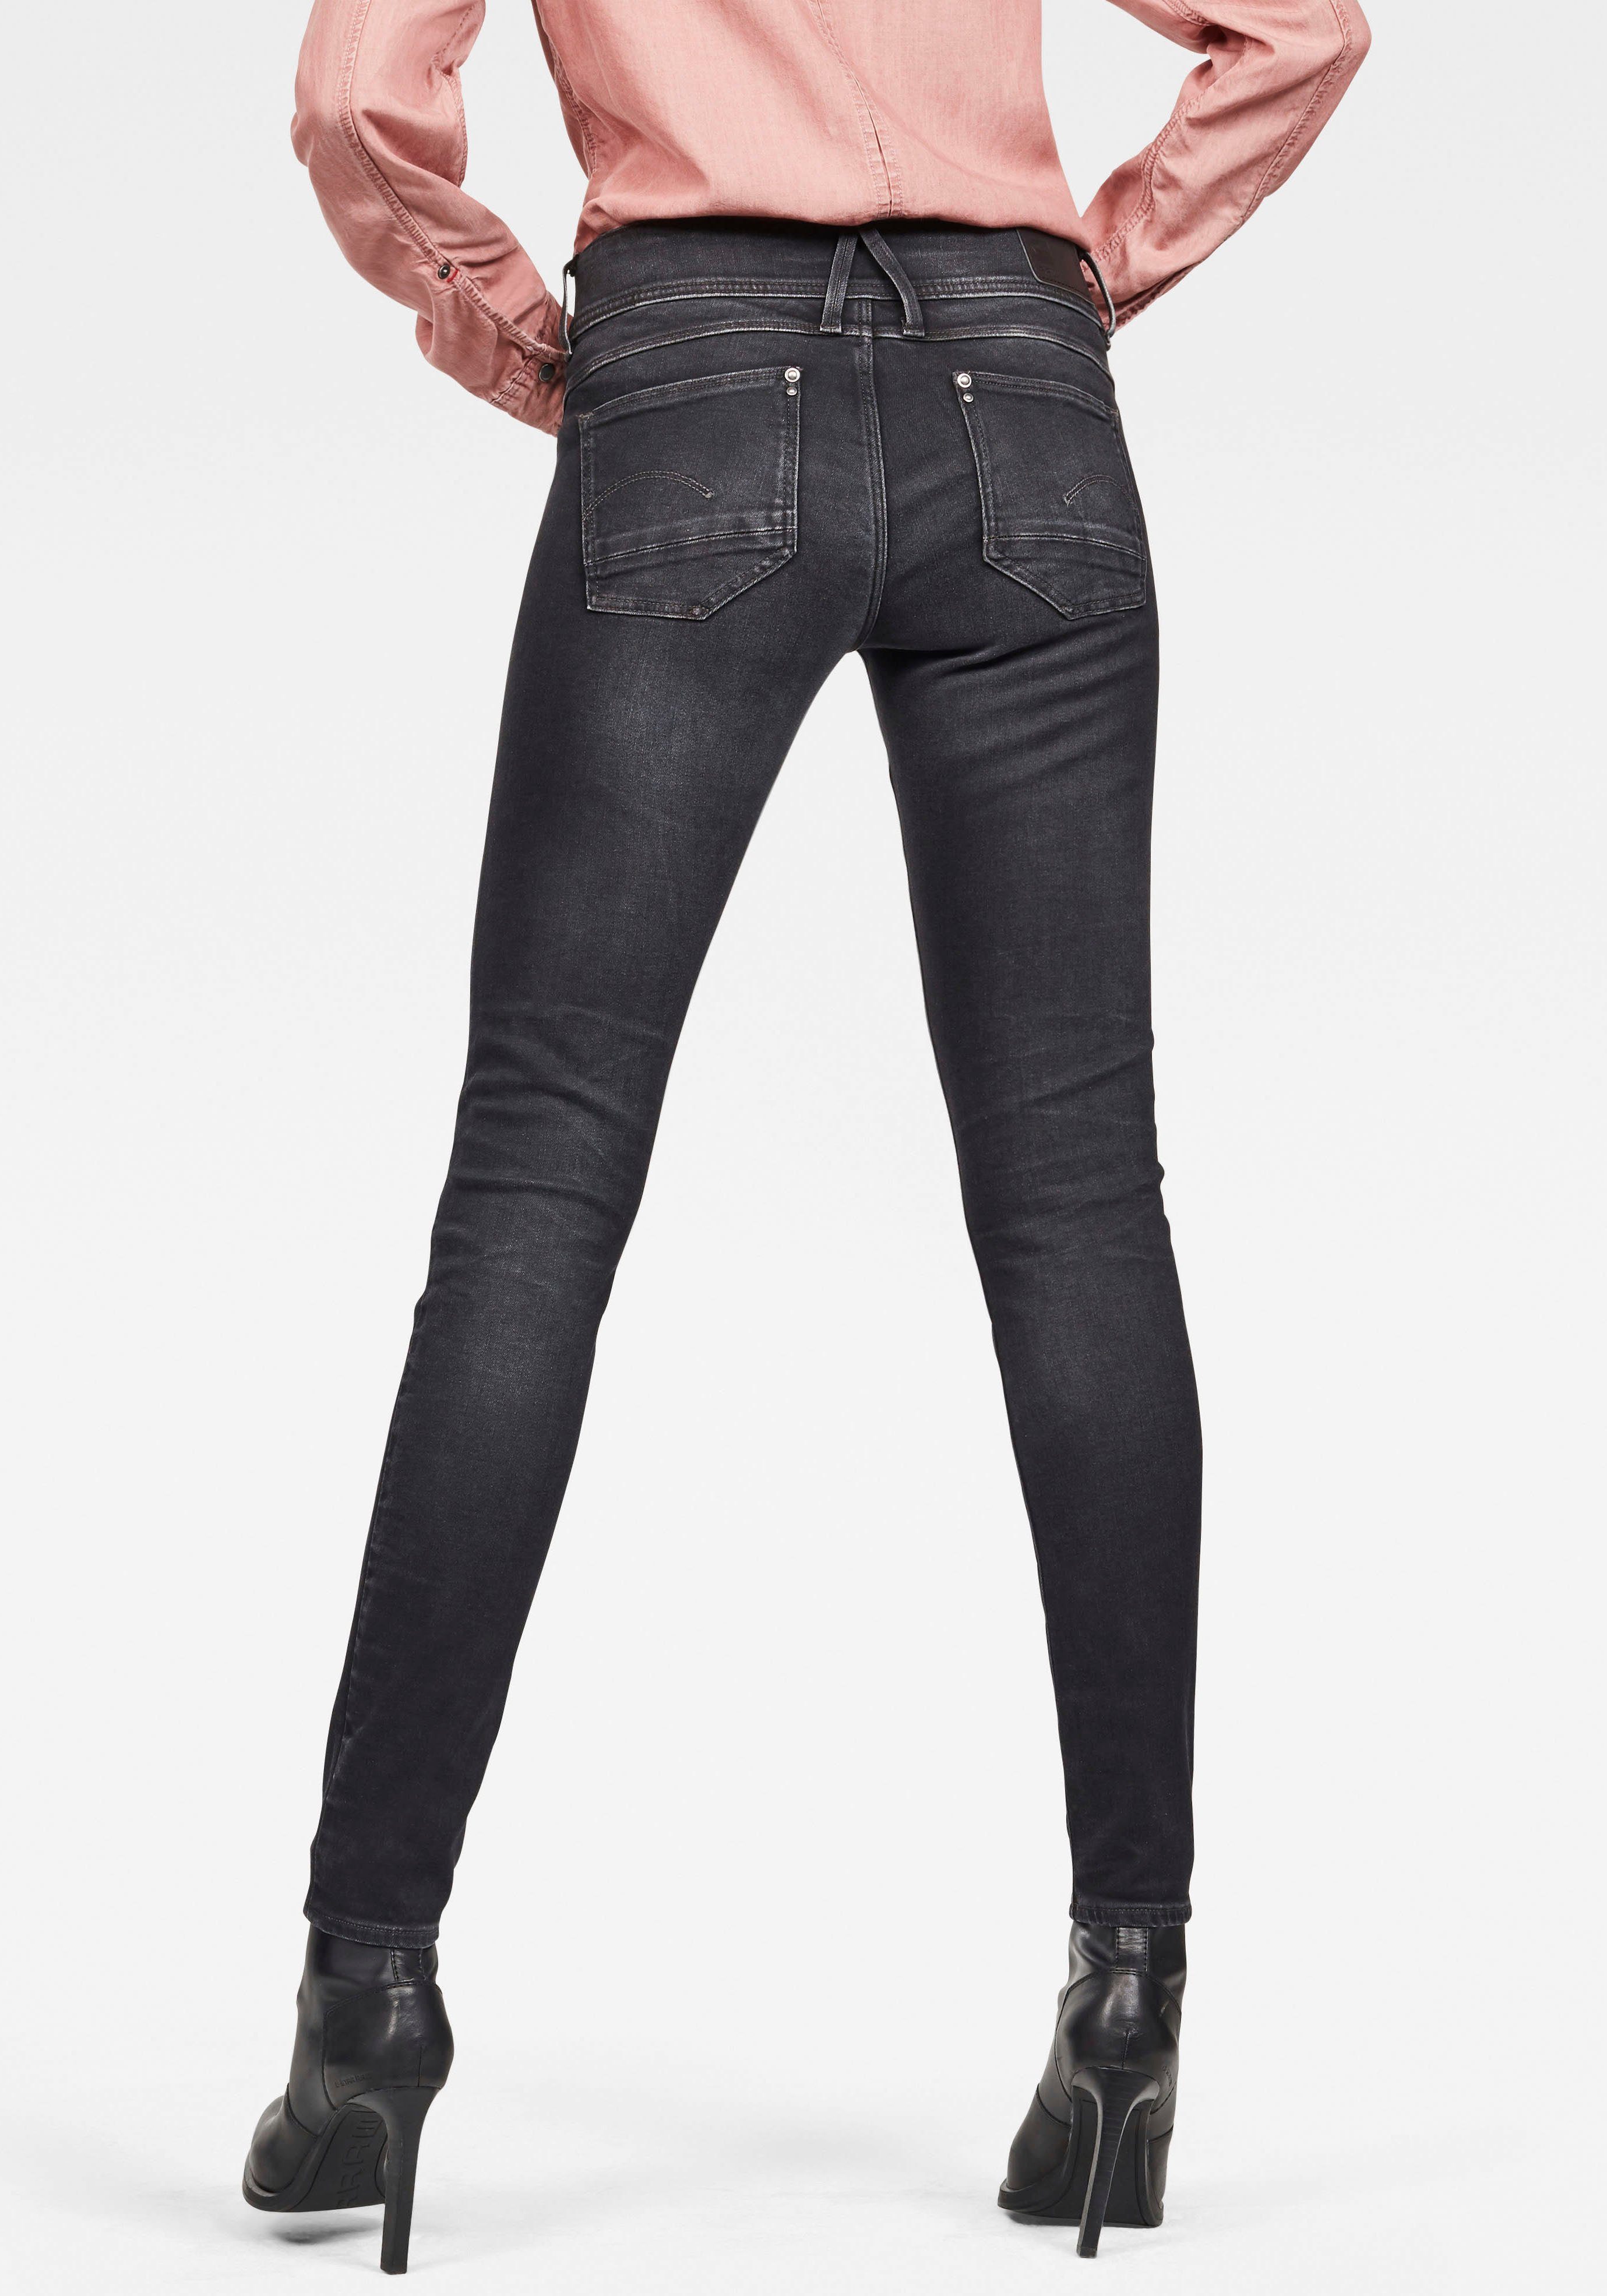 G-Star RAW Skinny-fit-Jeans Mid Waist black dusty Elto grey, nero superstretch Elasthan-Anteil mit Skinny